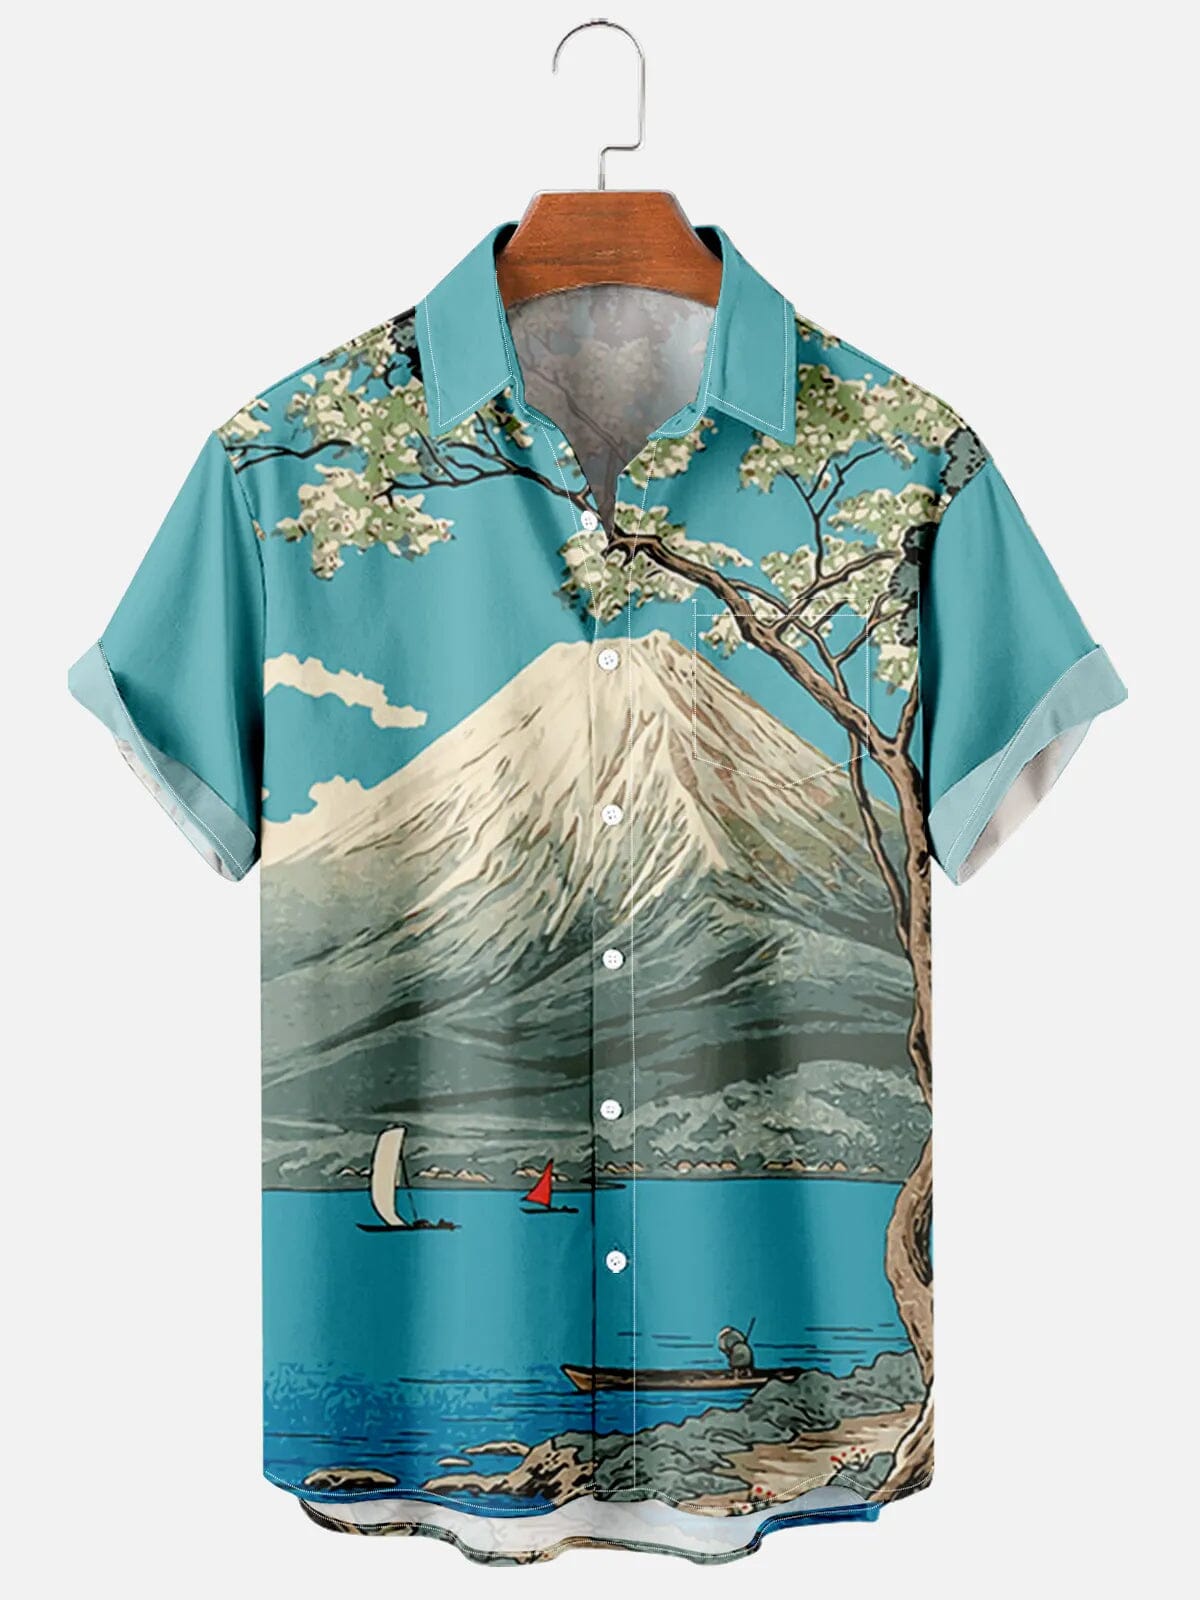 Camisa Casual com Estampas Japonesas Camisa GatoGeek 